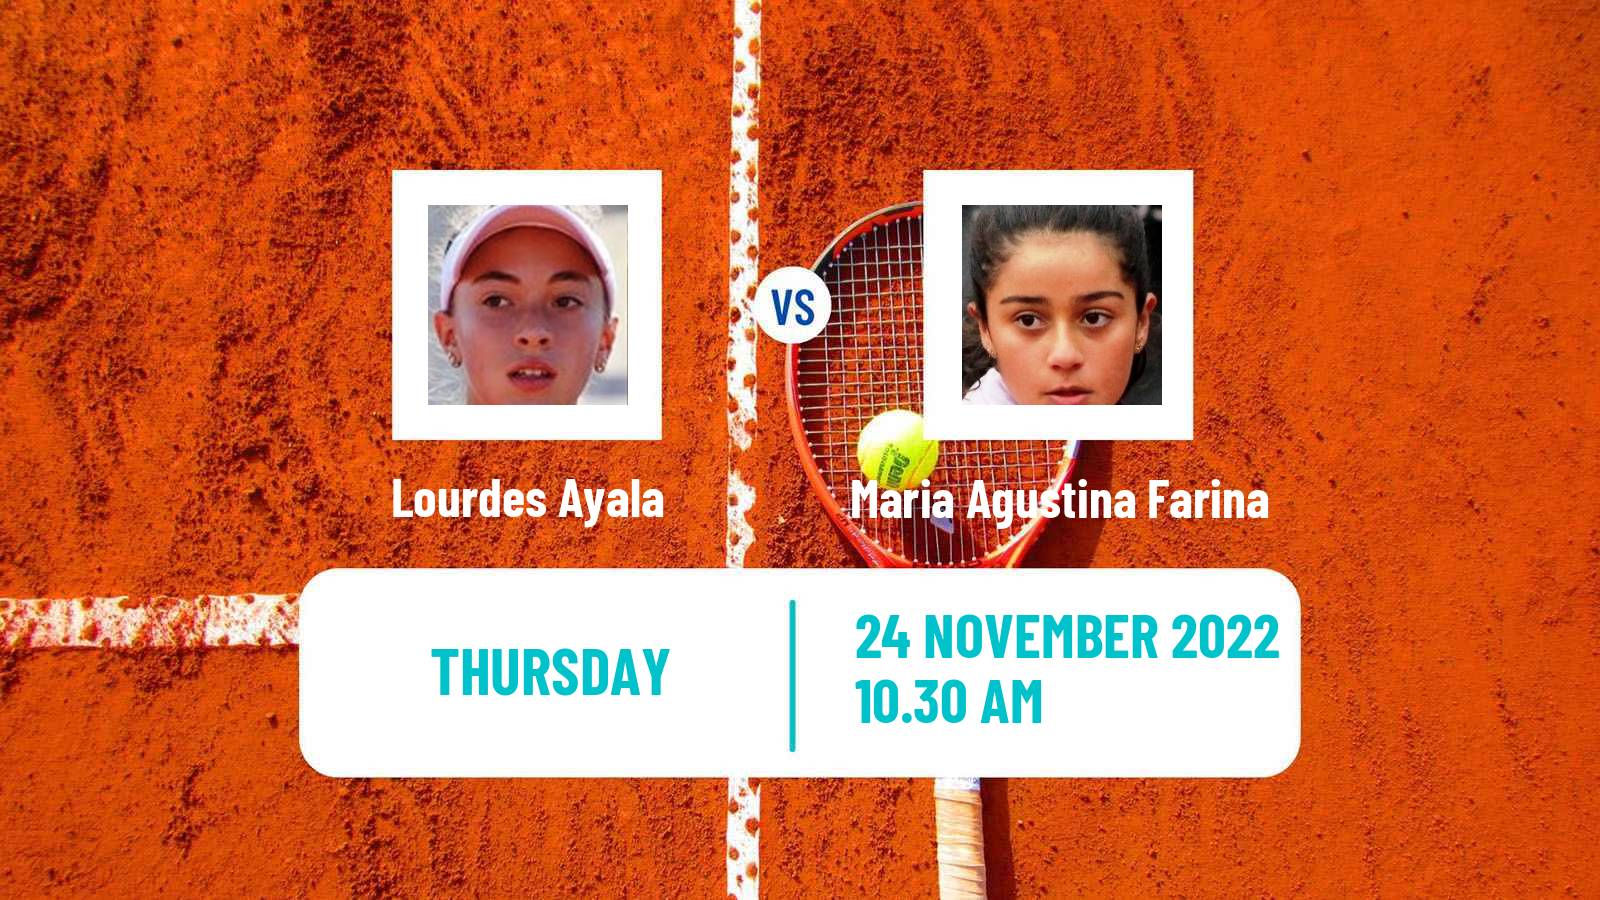 Tennis ITF Tournaments Lourdes Ayala - Maria Agustina Farina